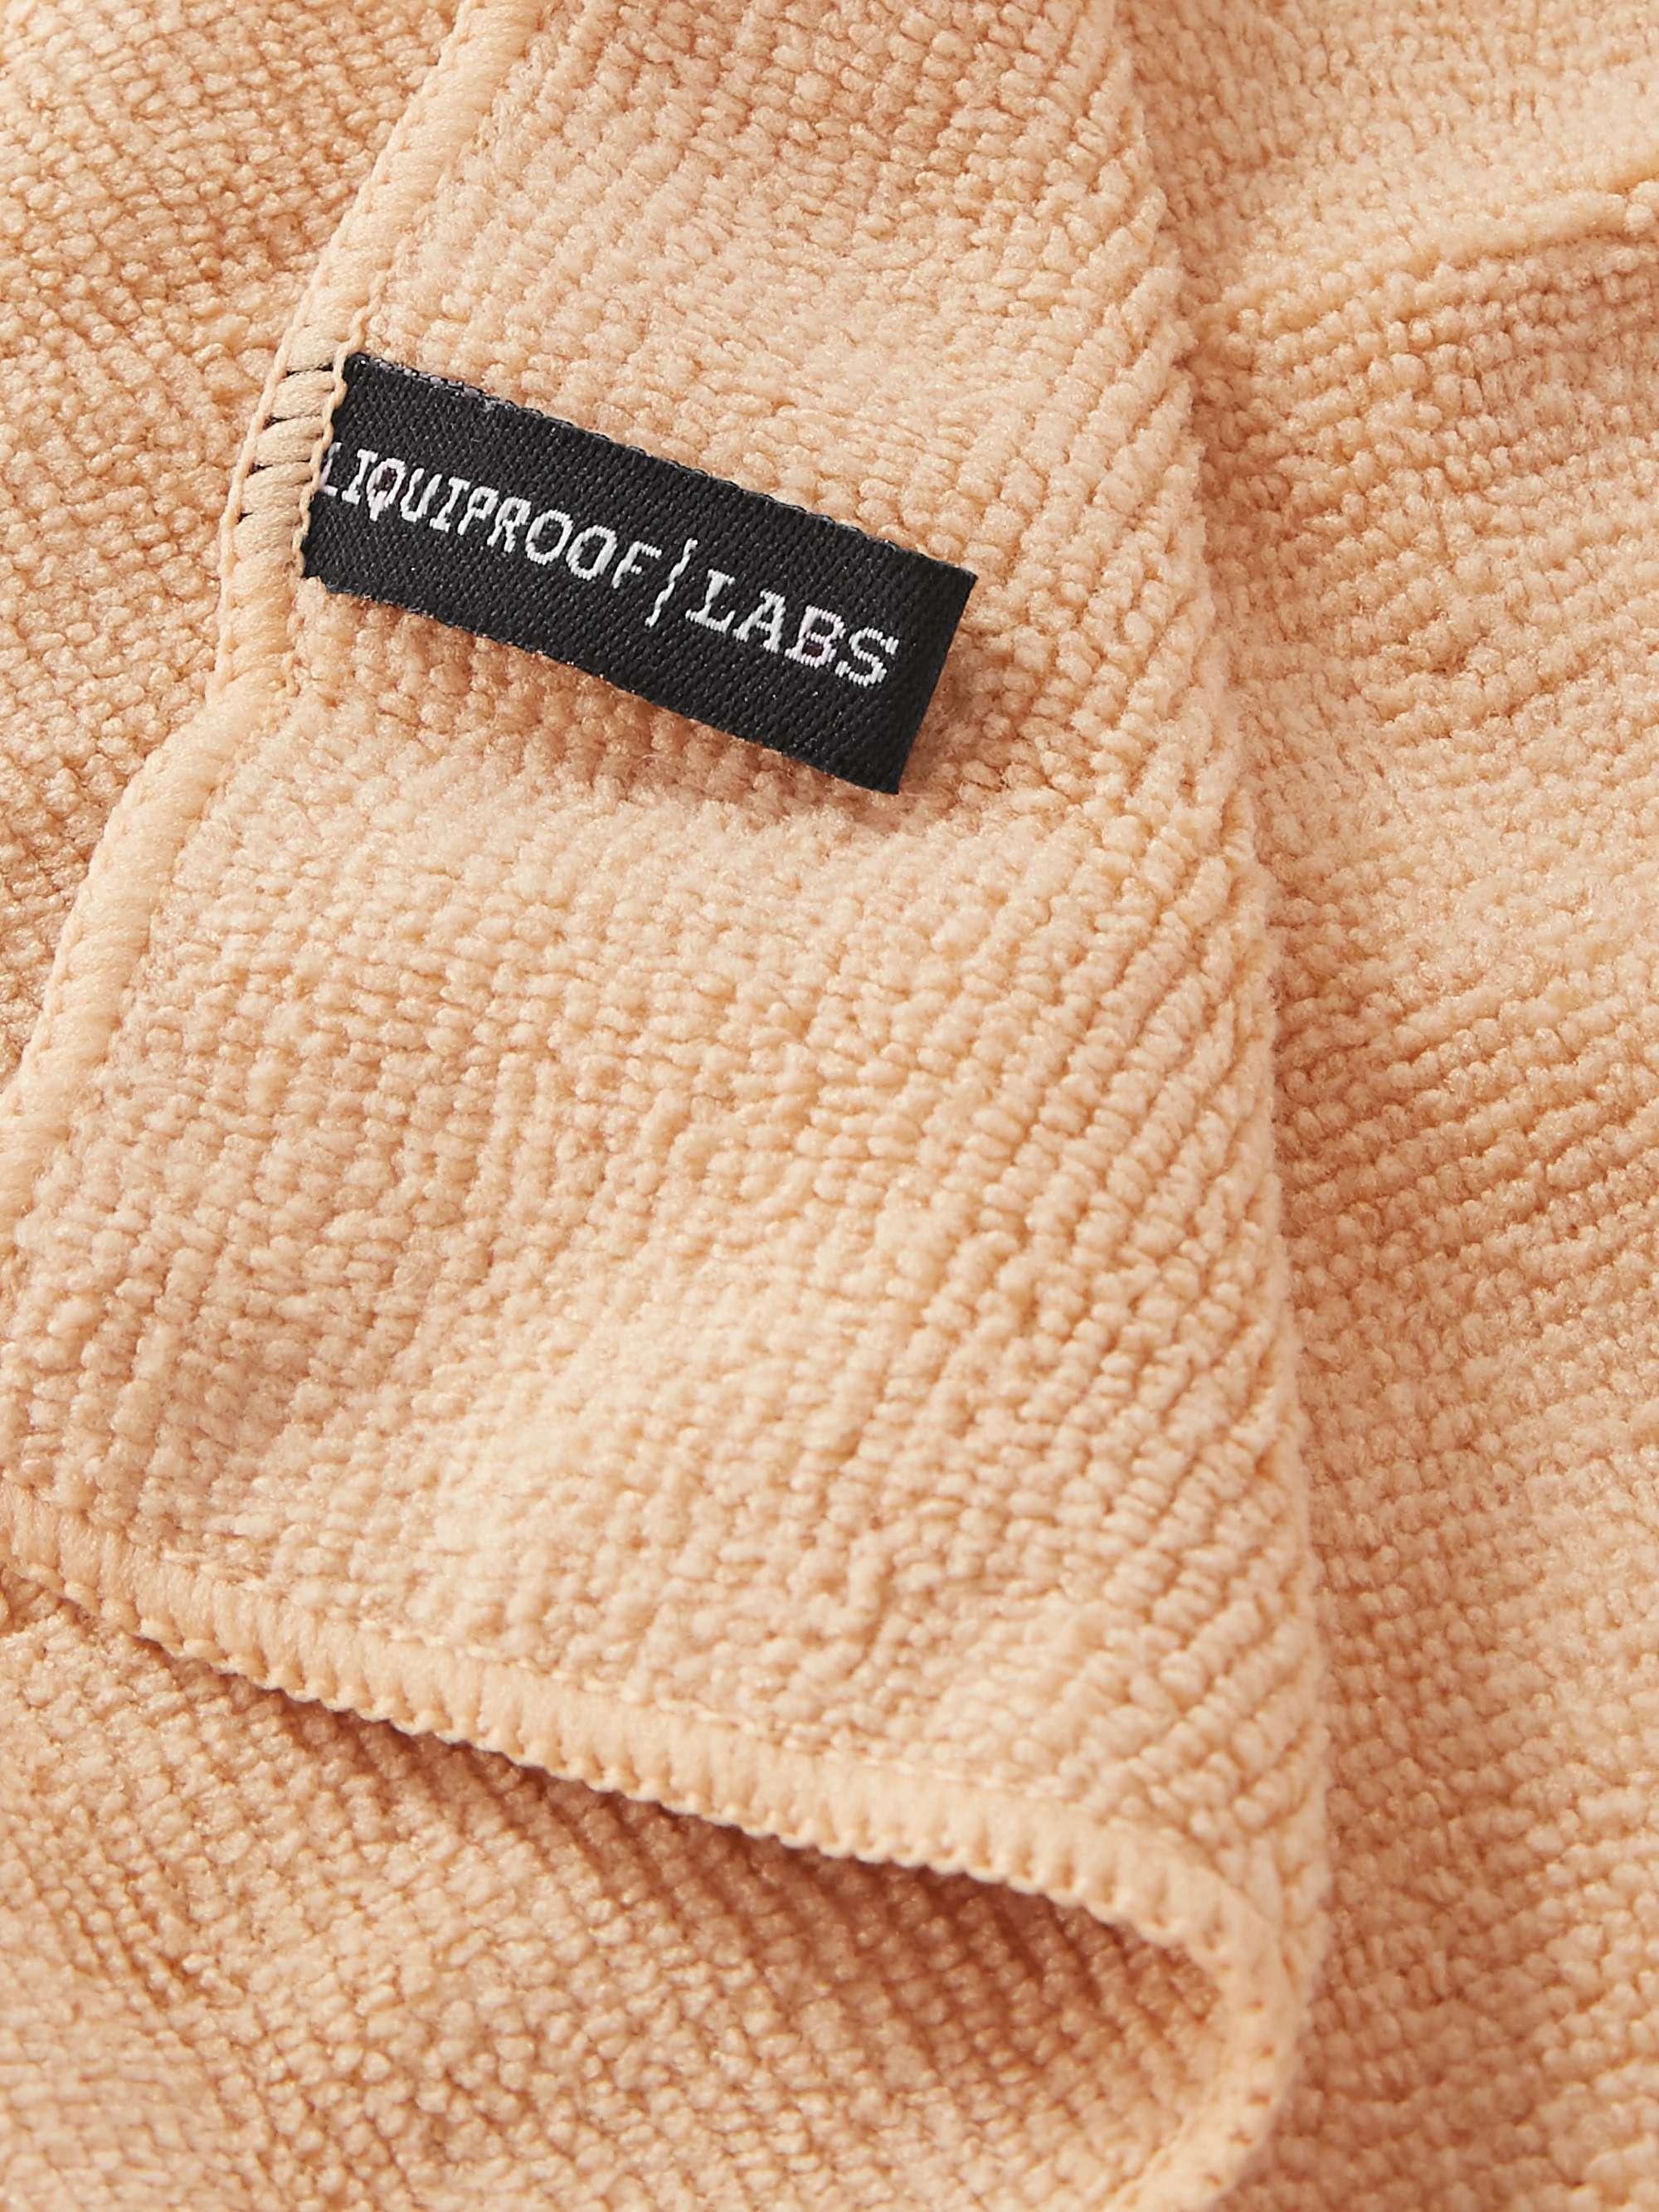 Liquiproof LABS Microfibre All-Purpose Cloth